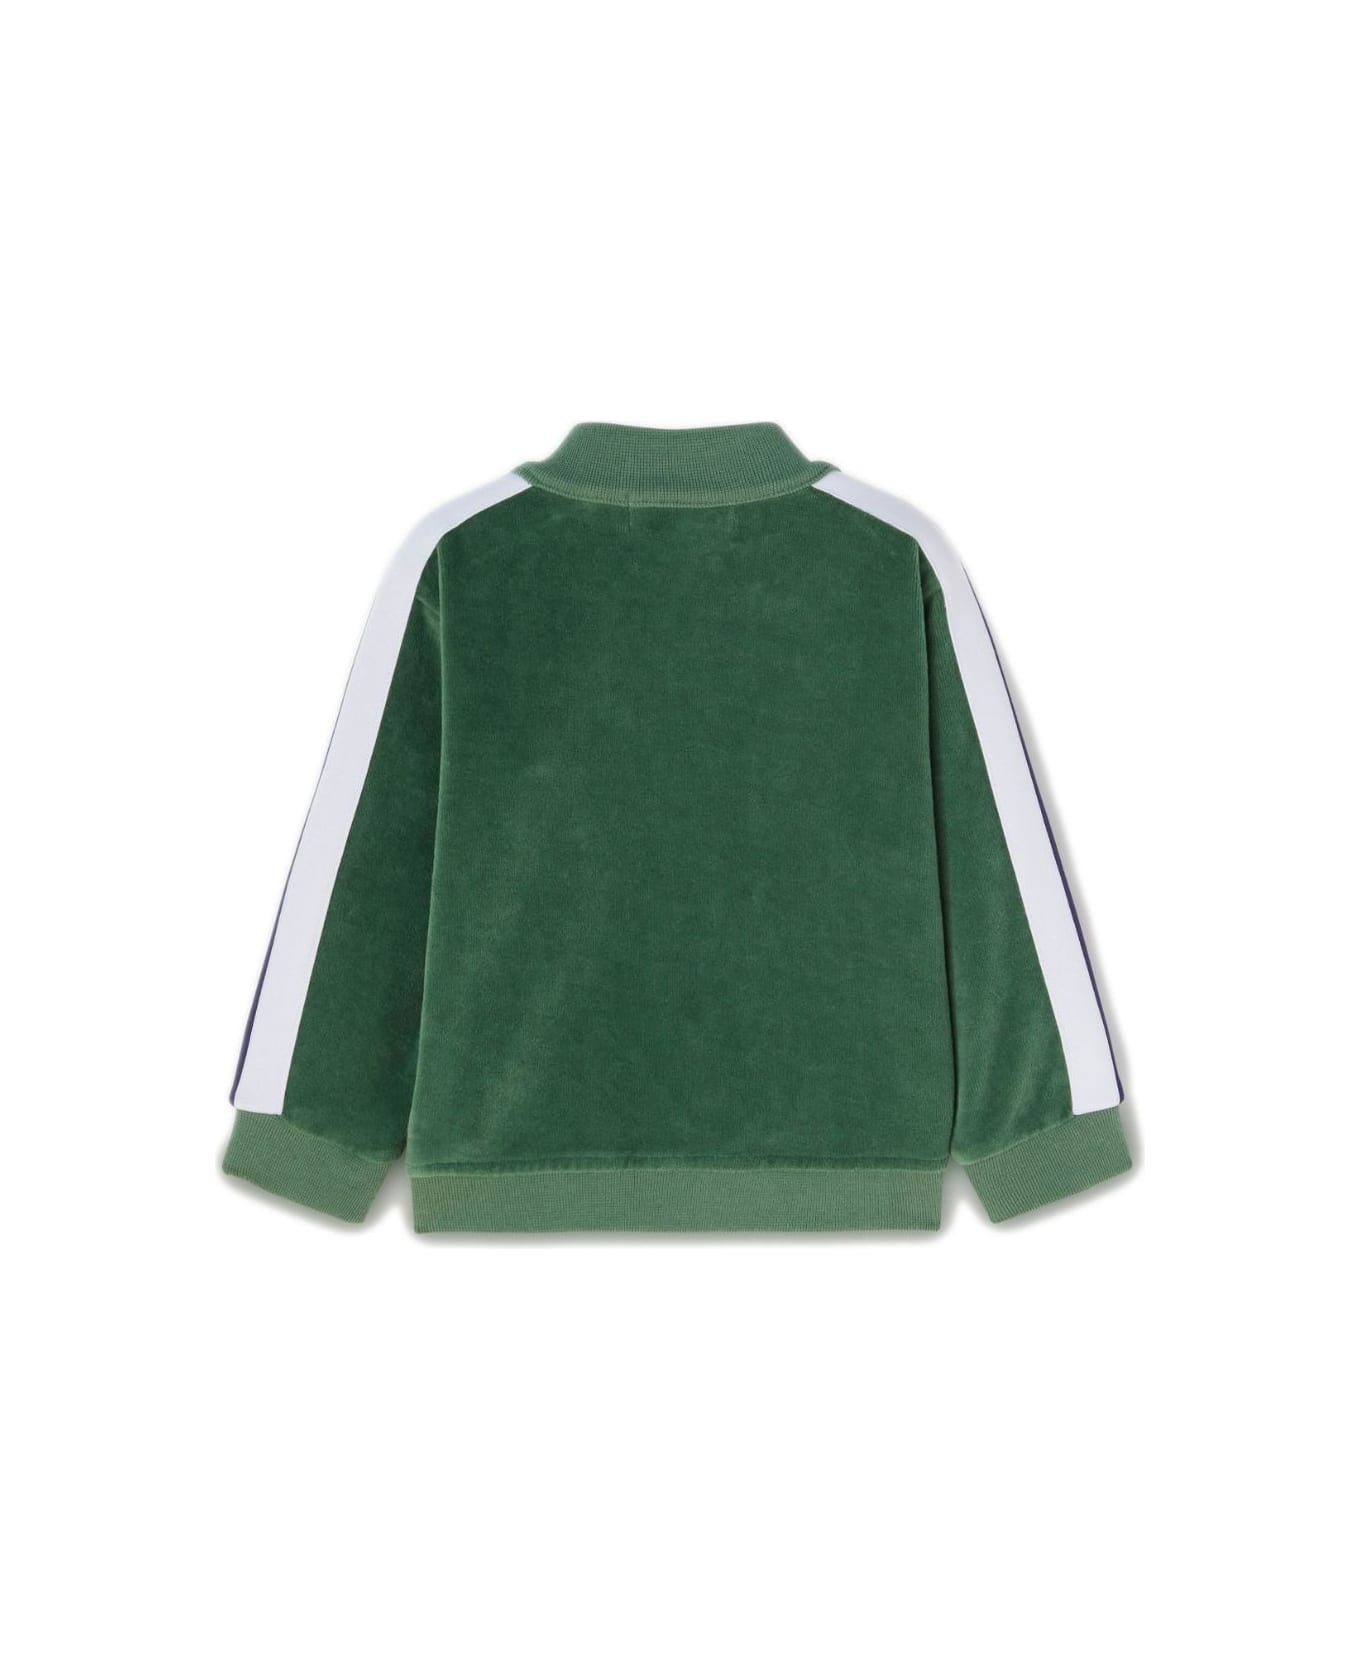 Palm Angels Green Track Jacket With Zip And Logo - Green ニットウェア＆スウェットシャツ